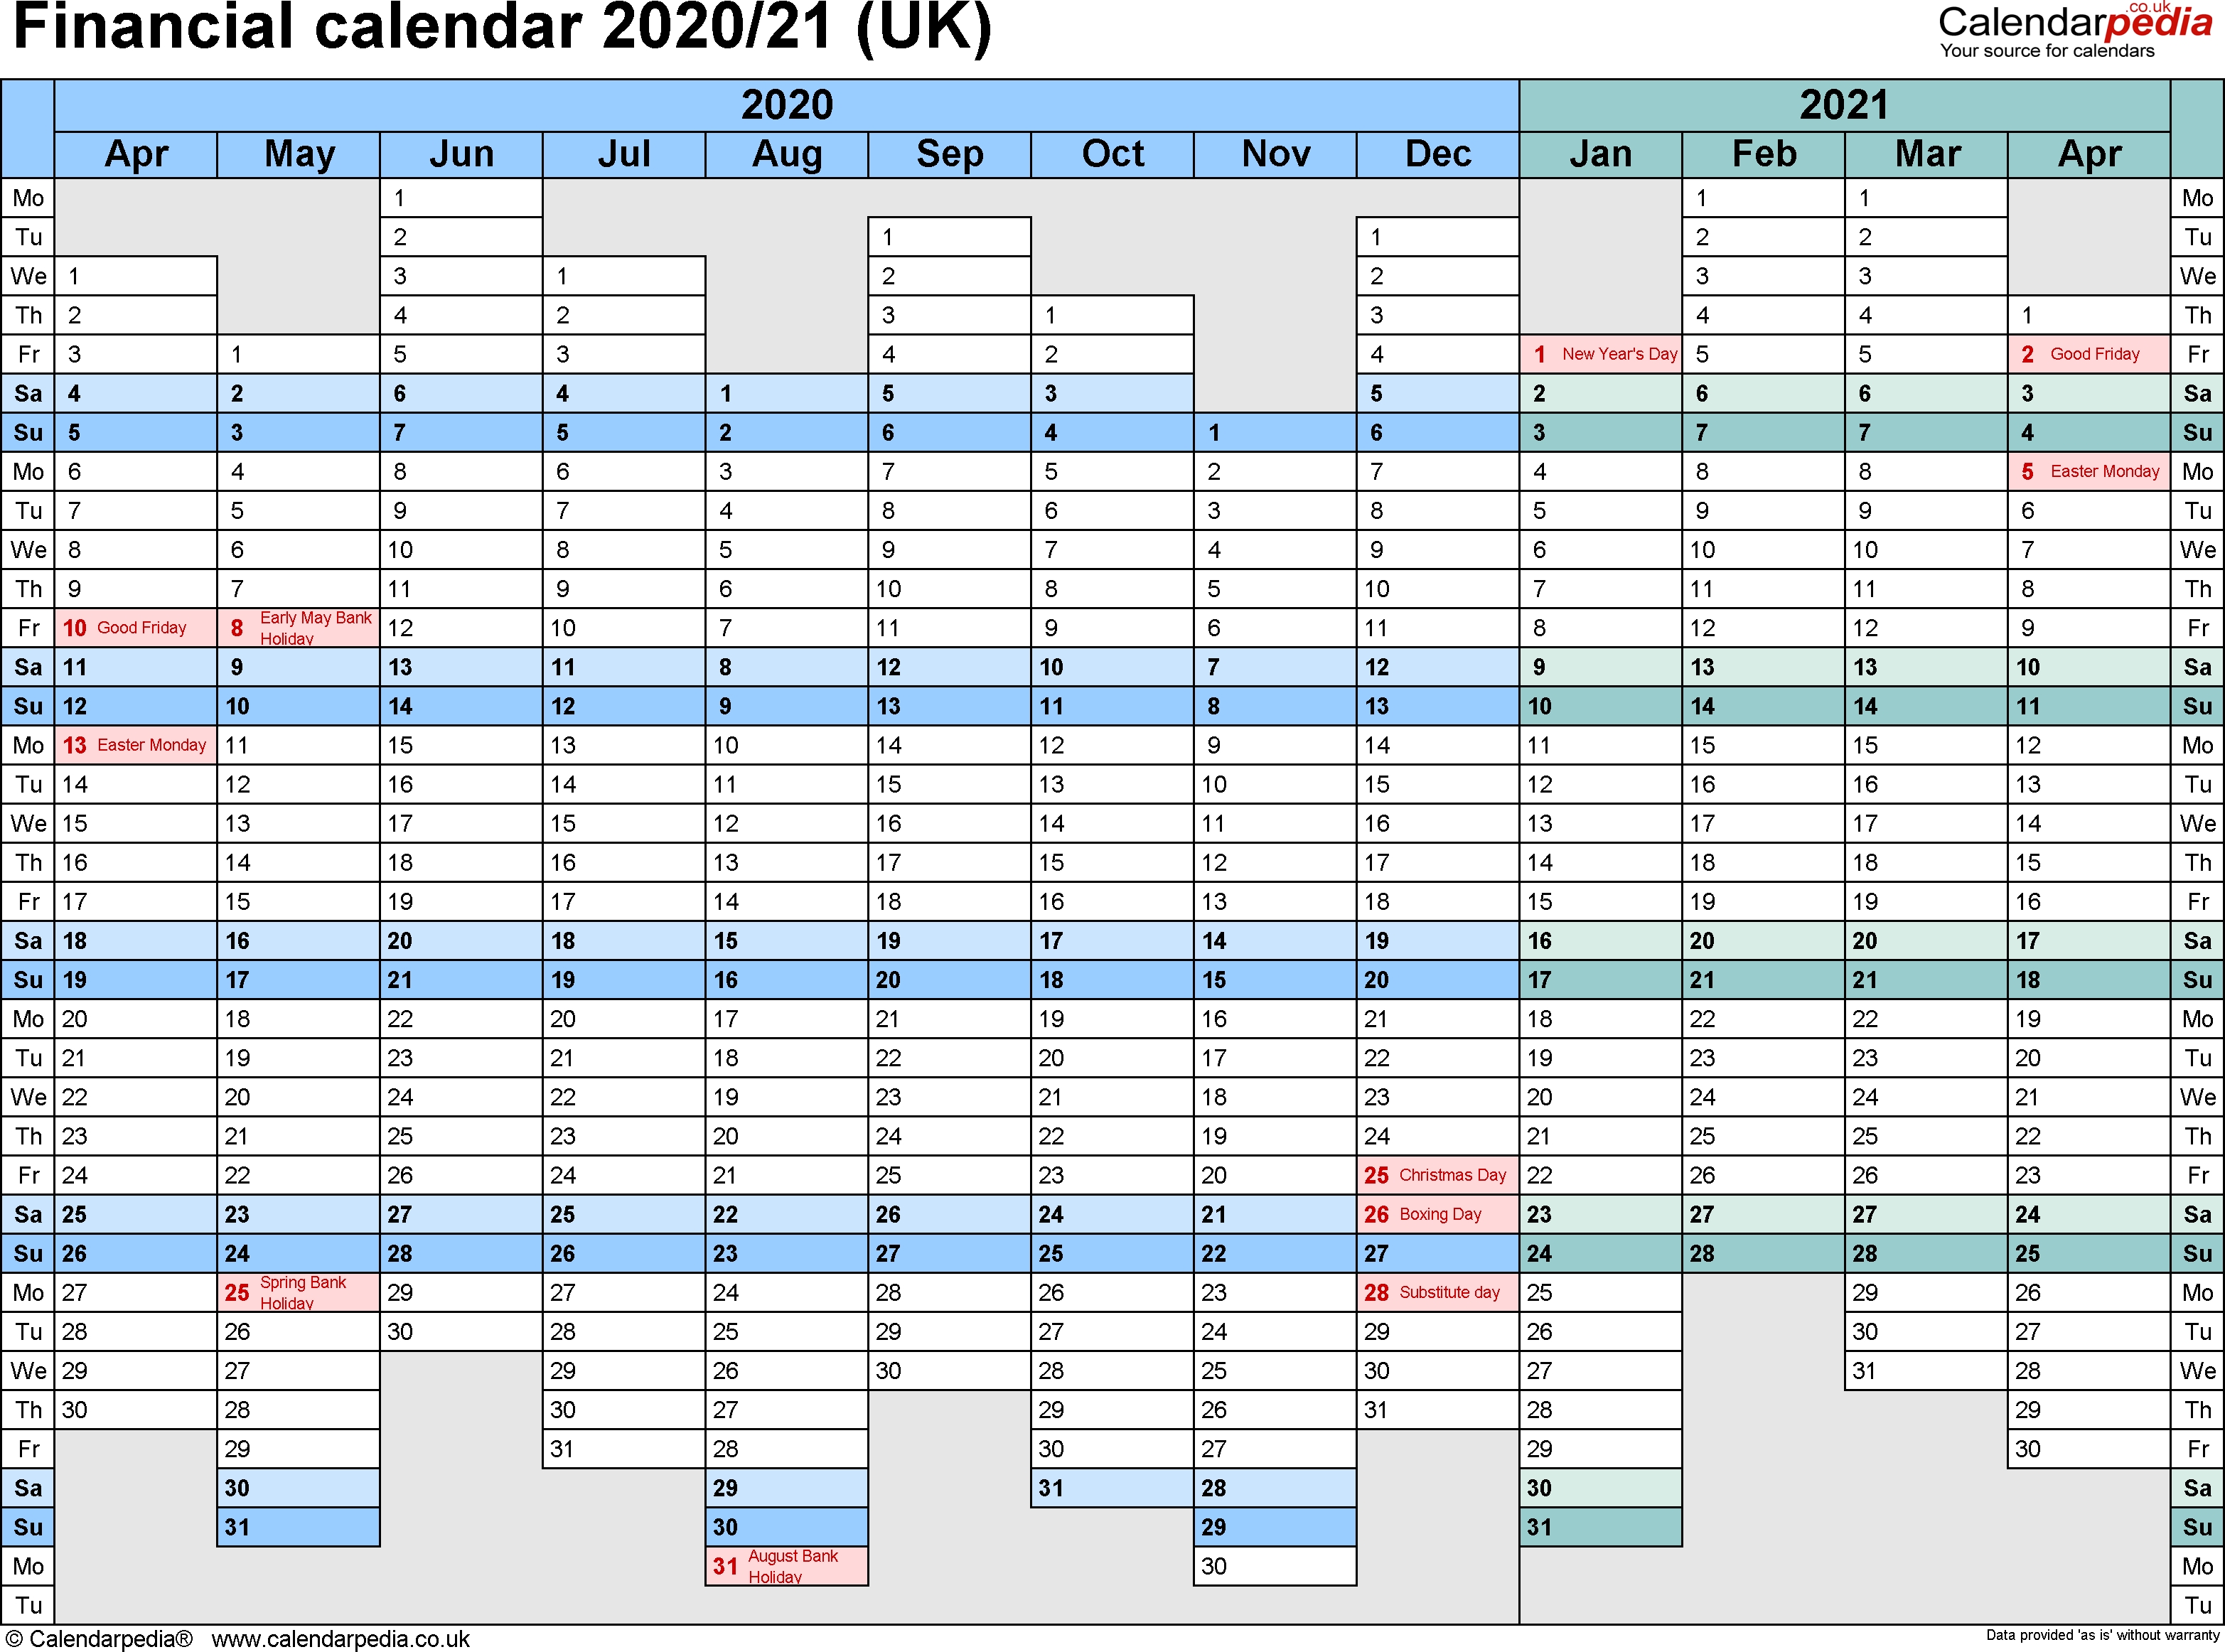 Financial Calendars 2020/21 (Uk) In Pdf Format regarding Hmrc Tax Calender 2019/2020